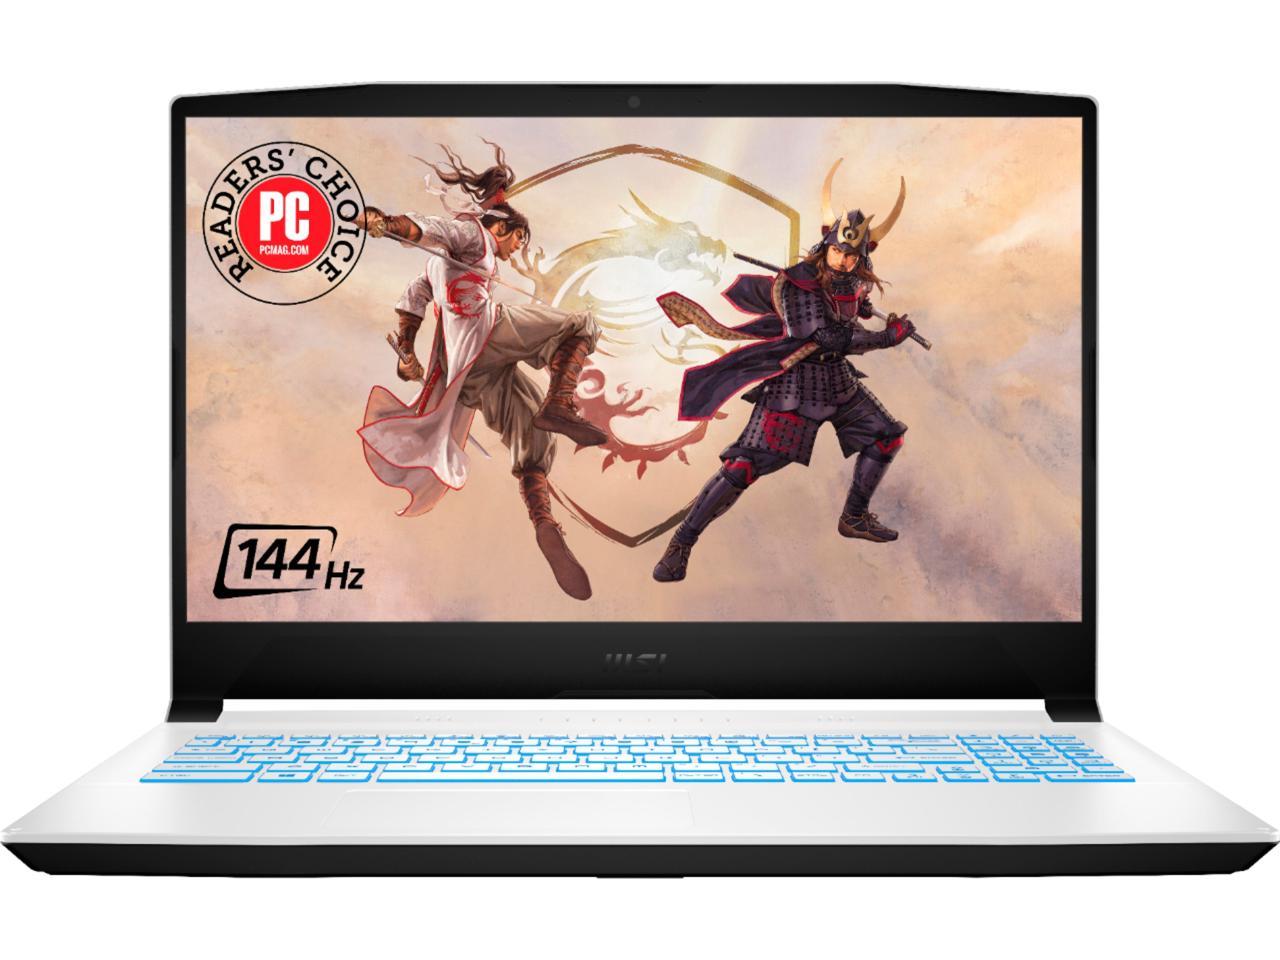 Msi Sword Gaming & Business Laptop (Intel I7-11800H 8-Core, 32Gb Ram, 1Tb Pcie Ssd, 15.6" Full Hd